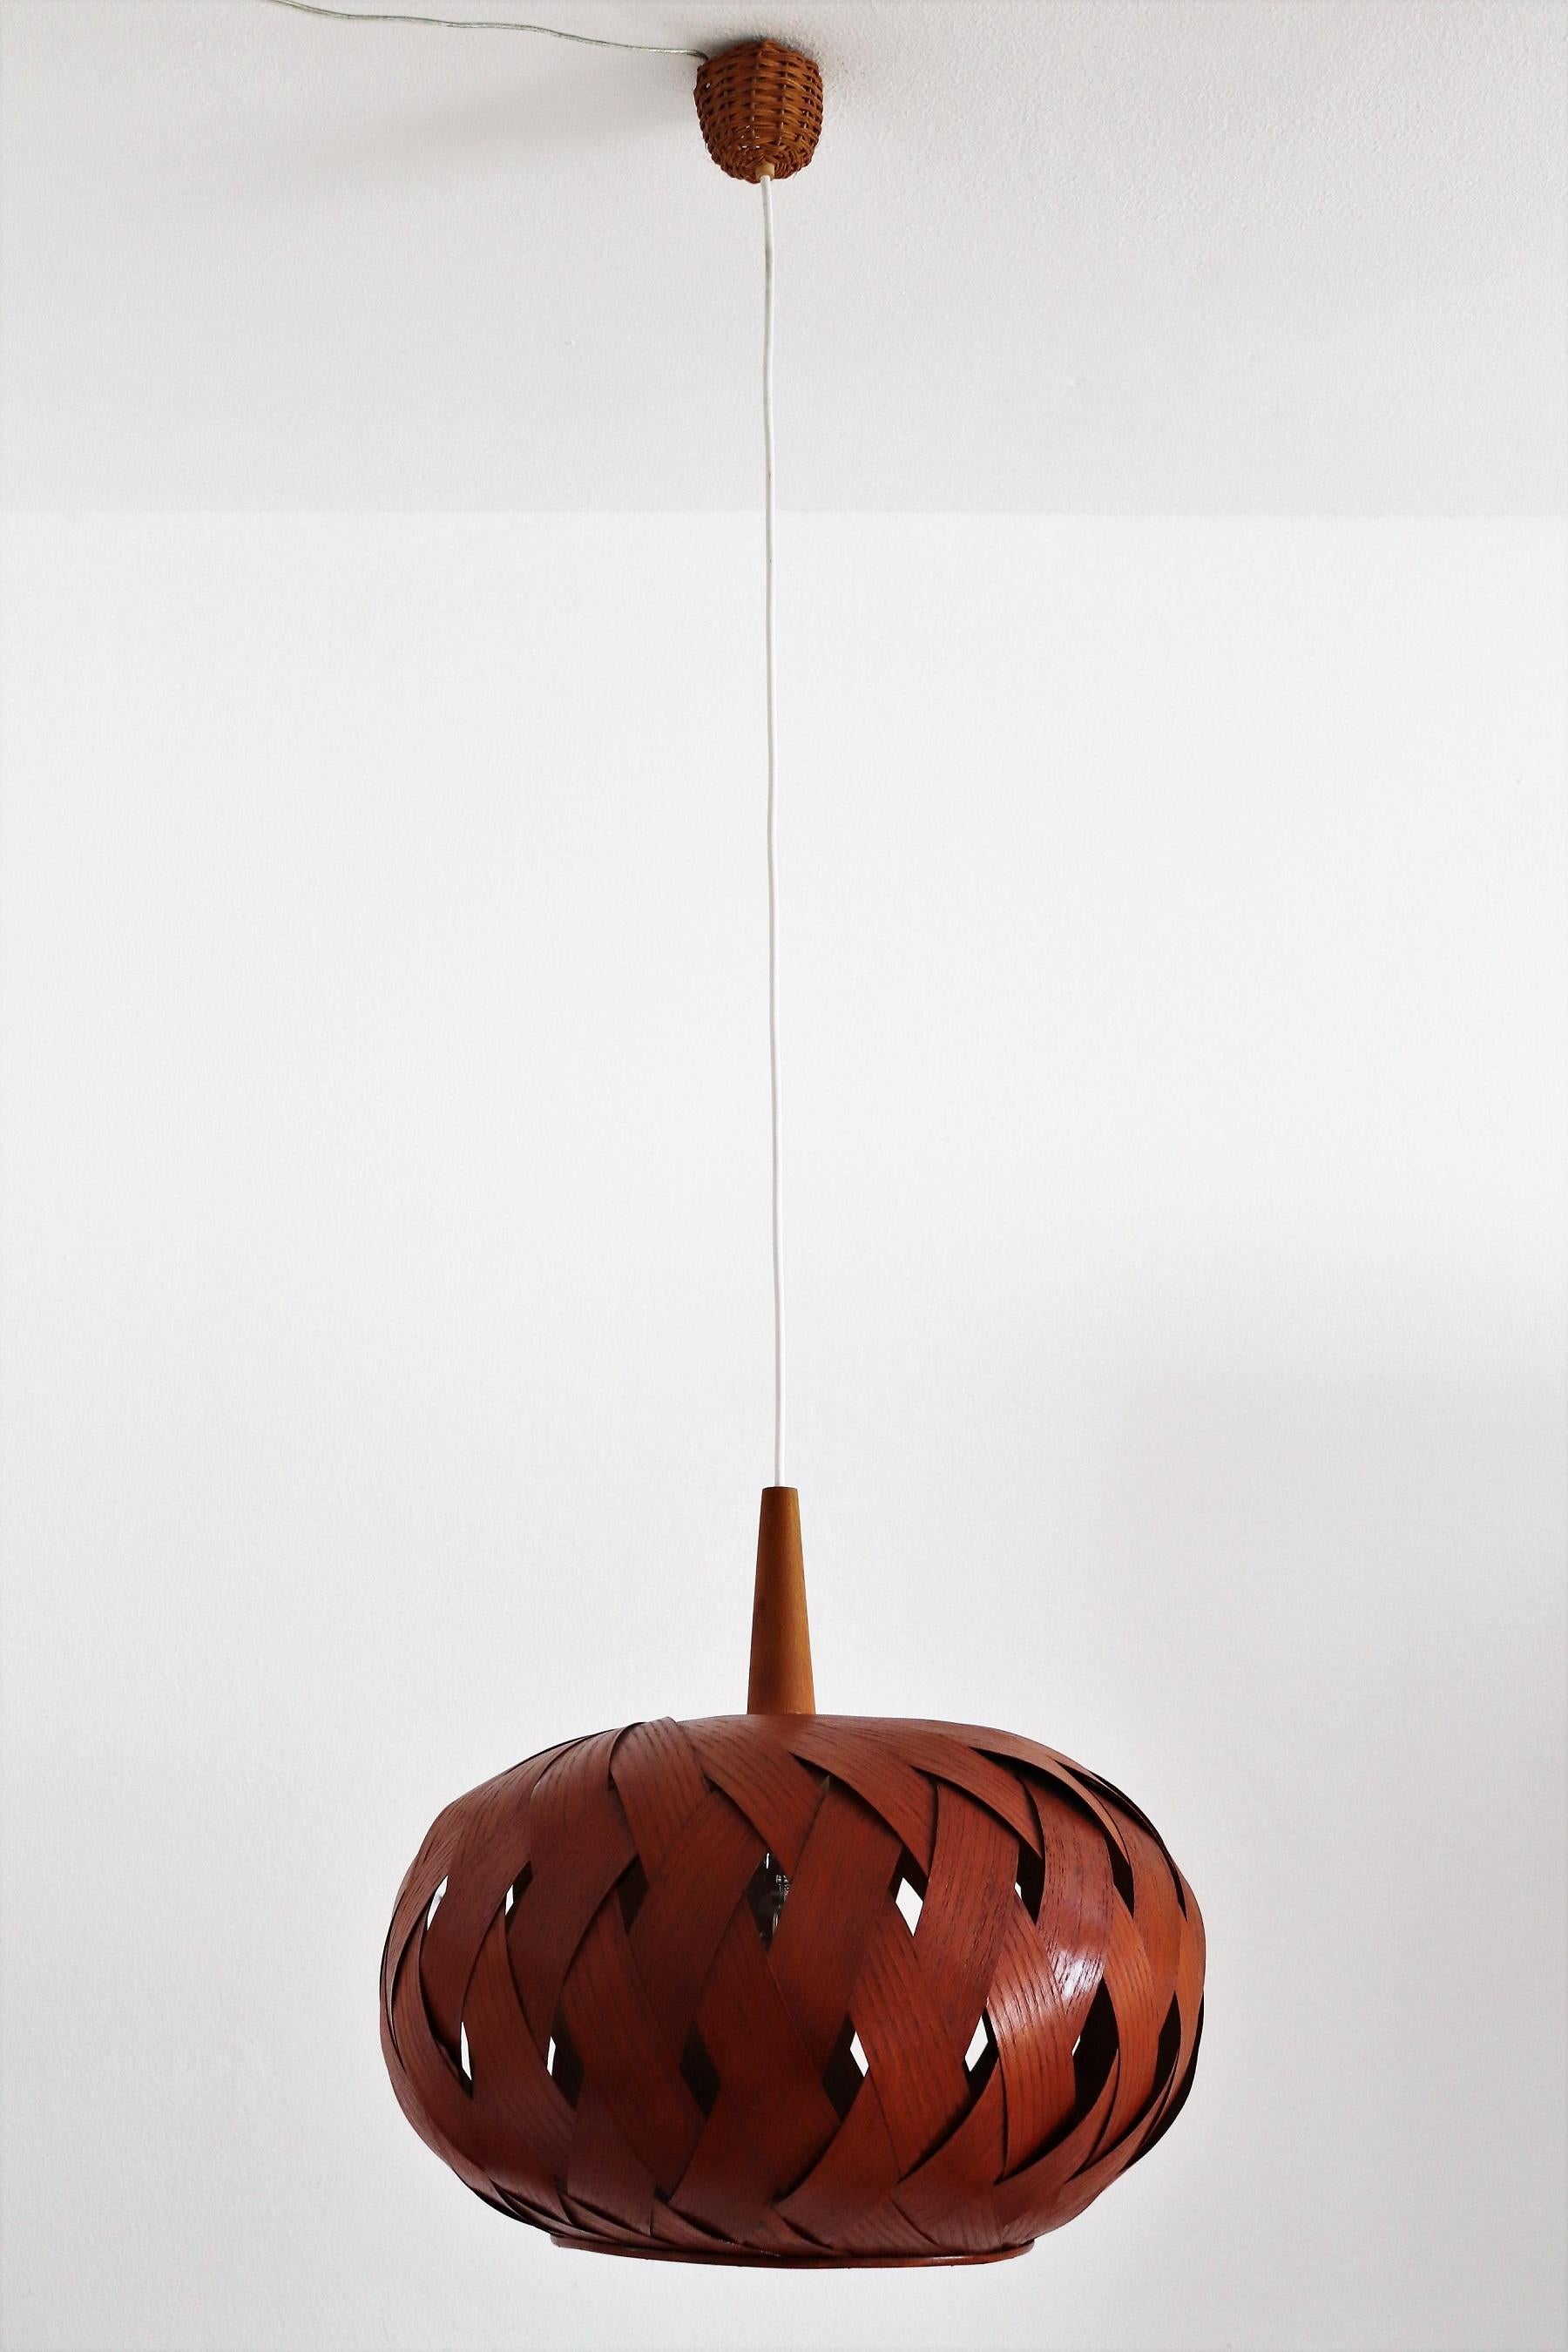 Organic Modernist Natural Teak Wood Veneer and Wicker Pendant Lamp, 1960s For Sale 2